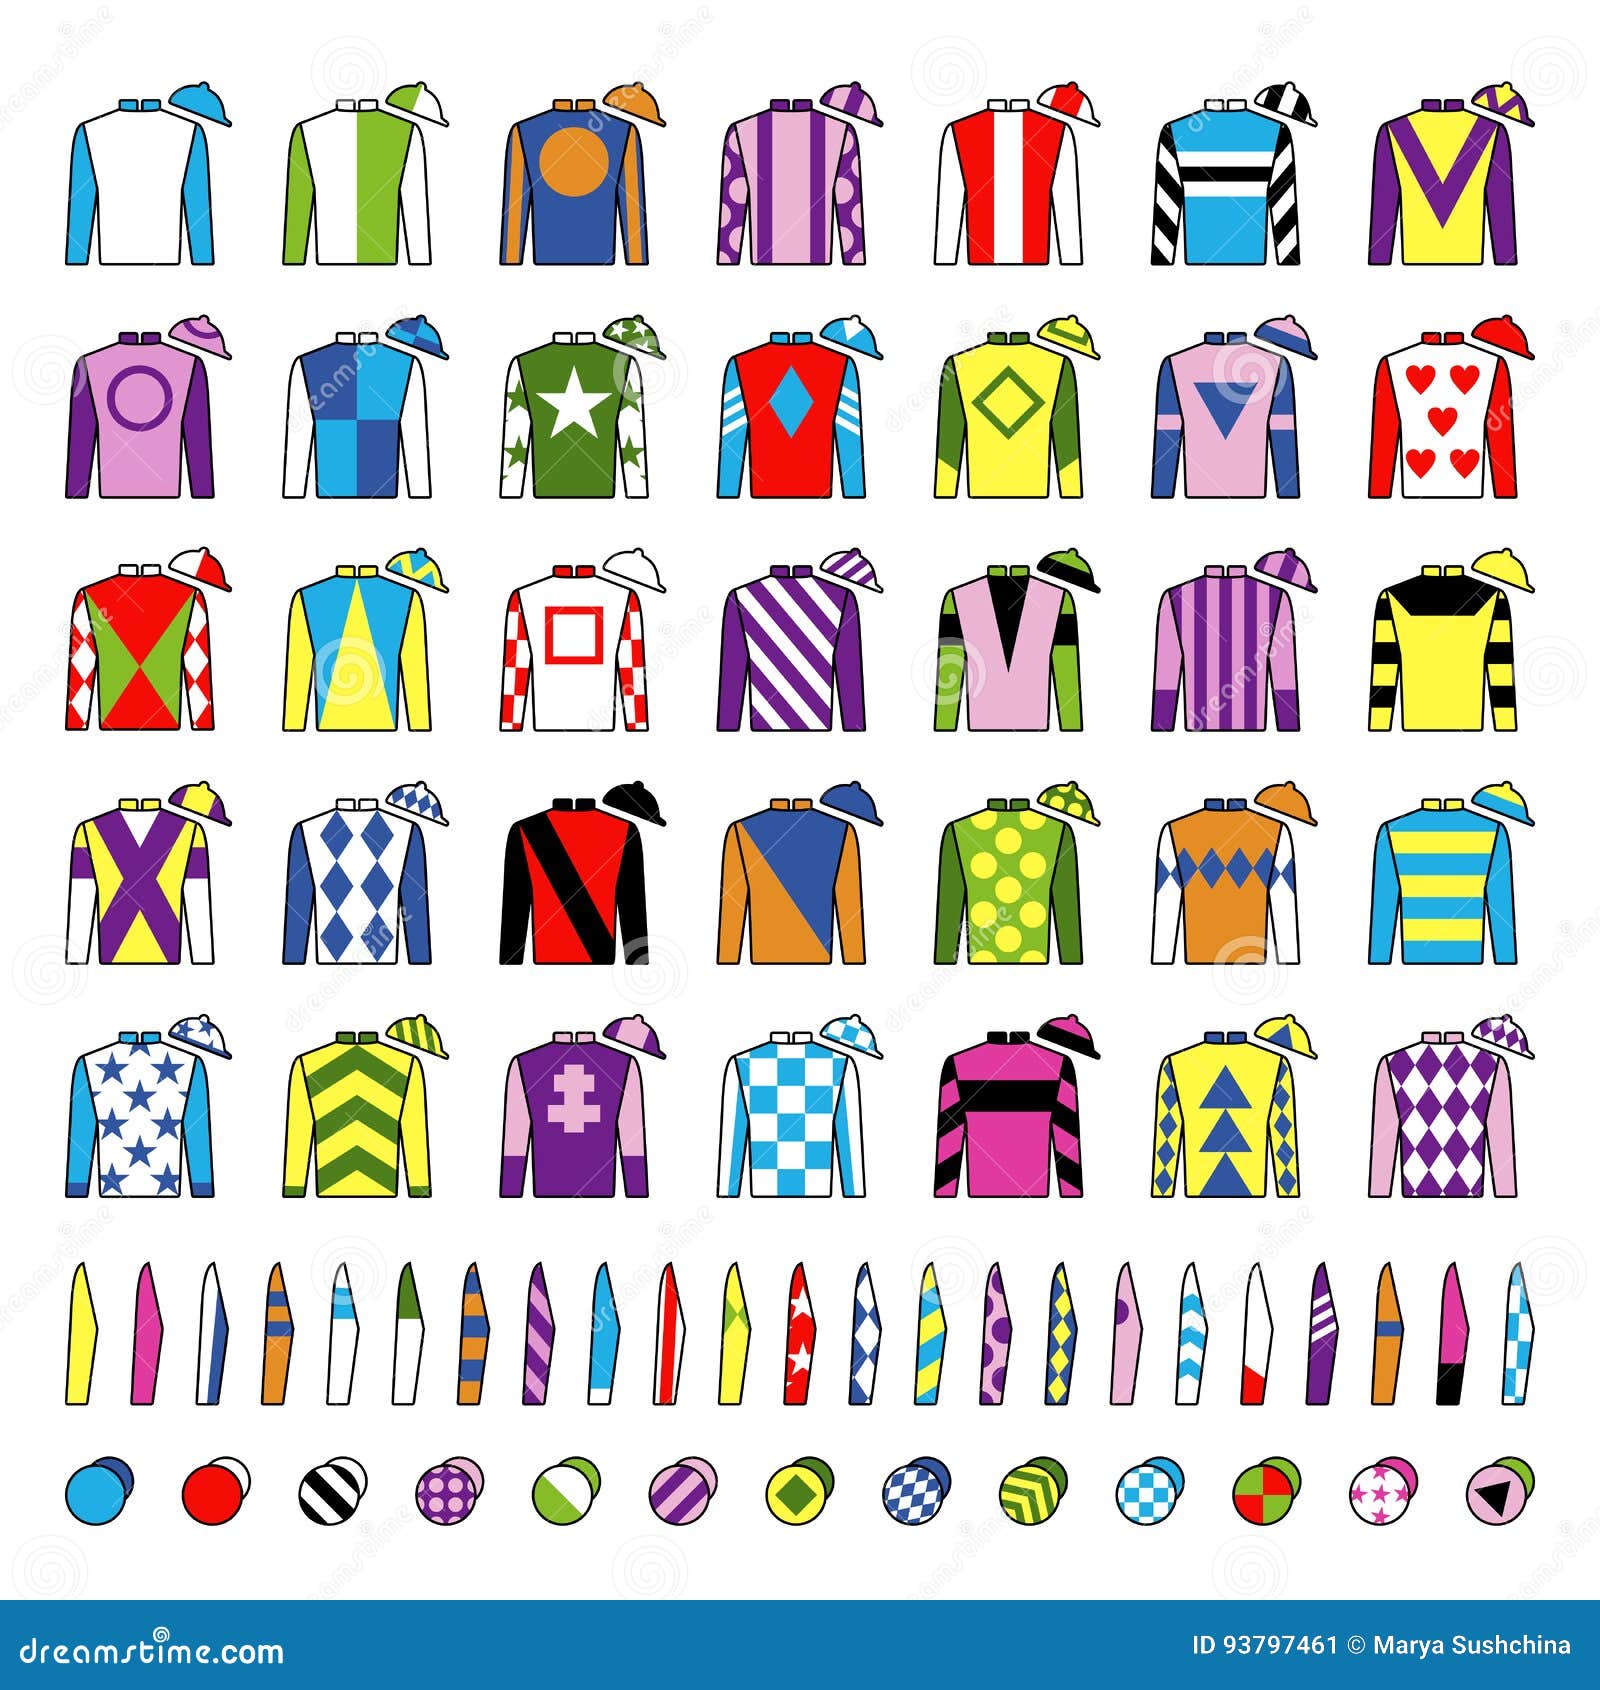 jockey uniform. traditional . jackets, silks, sleeves and hats. horse riding. horse racing. icons set.  on